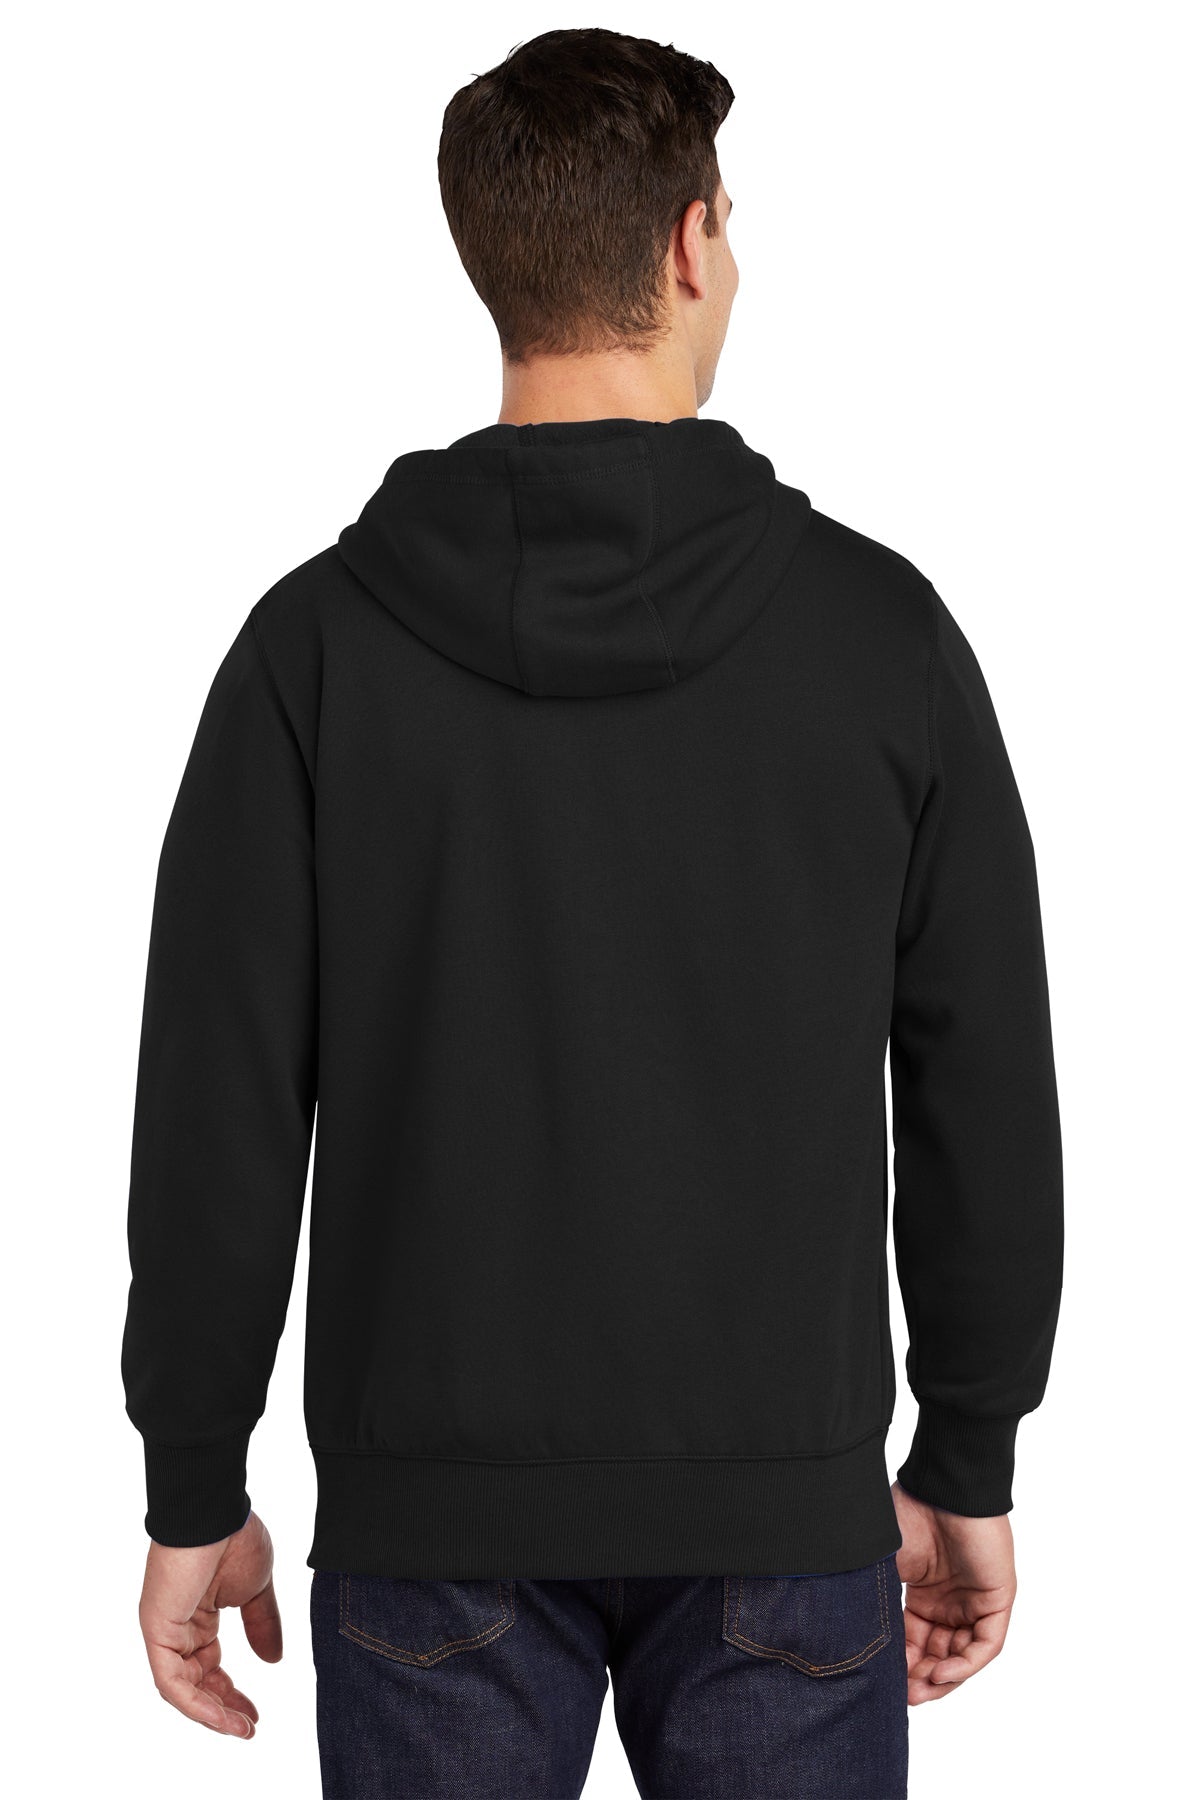 sport-tek_st258 _black_company_logo_sweatshirts